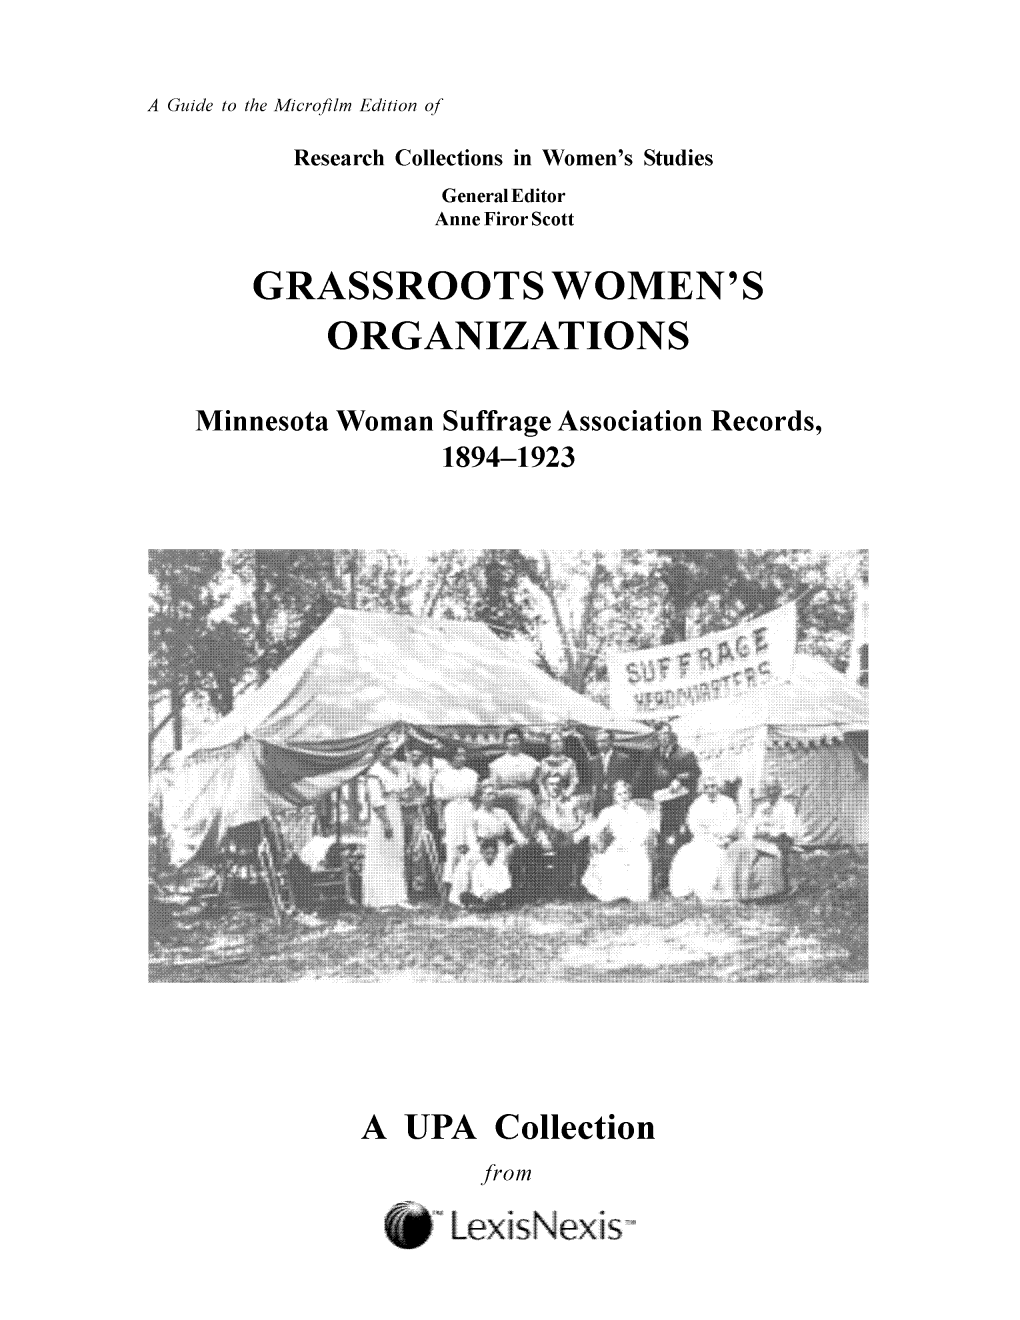 Grassroots Women's Organizations: Minnesota Woman